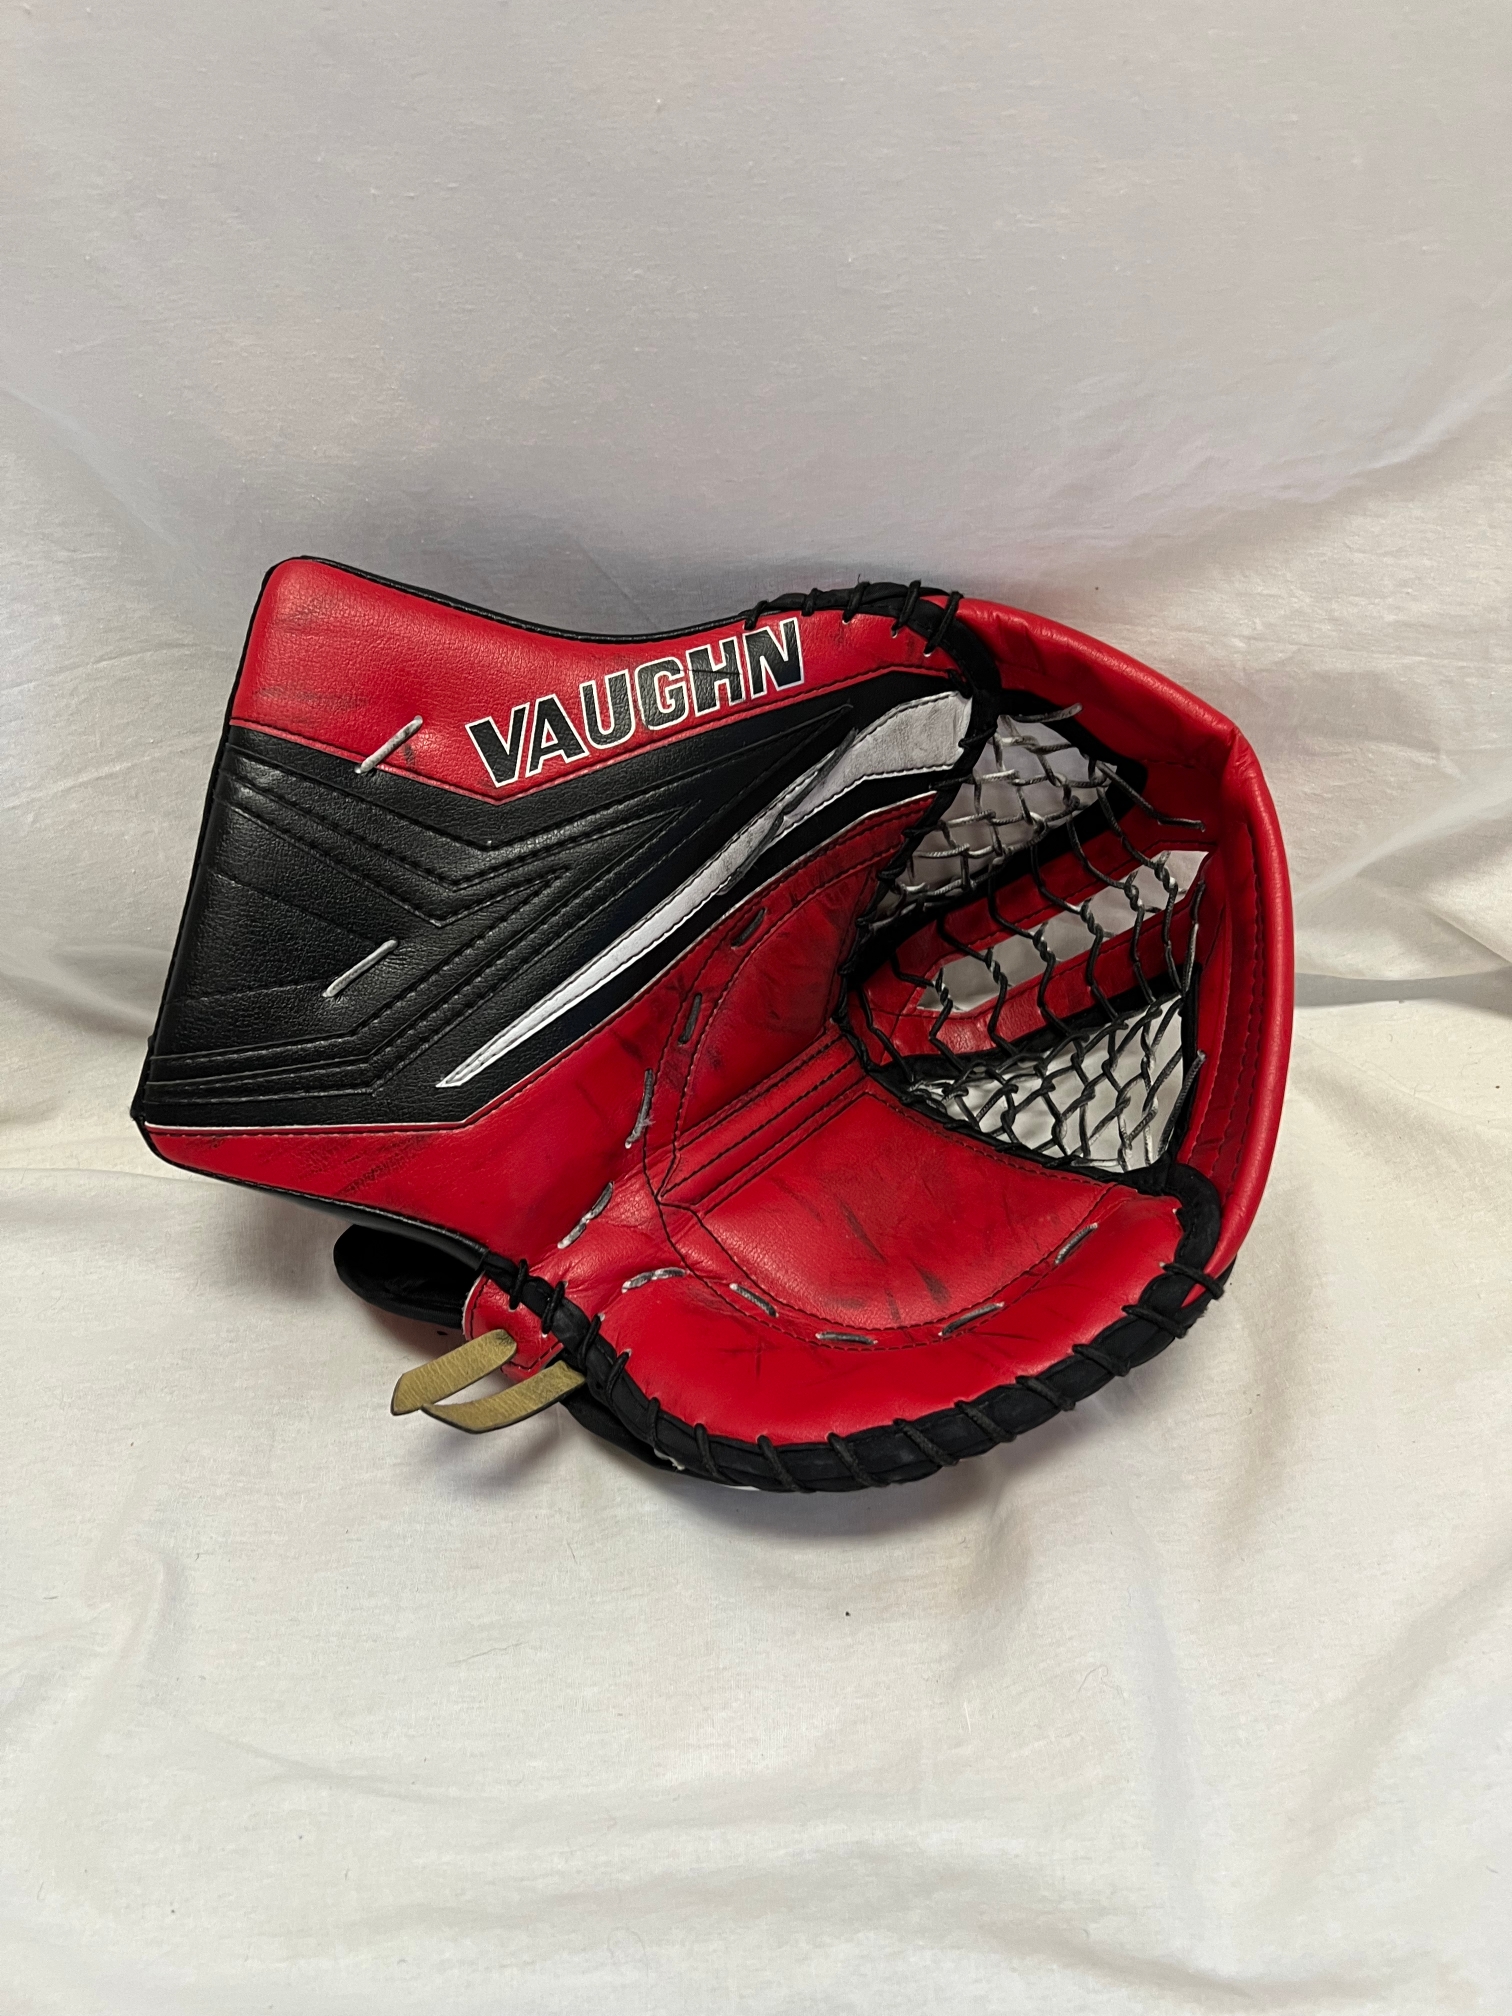 Carlson Pro Return Vaughn Glove